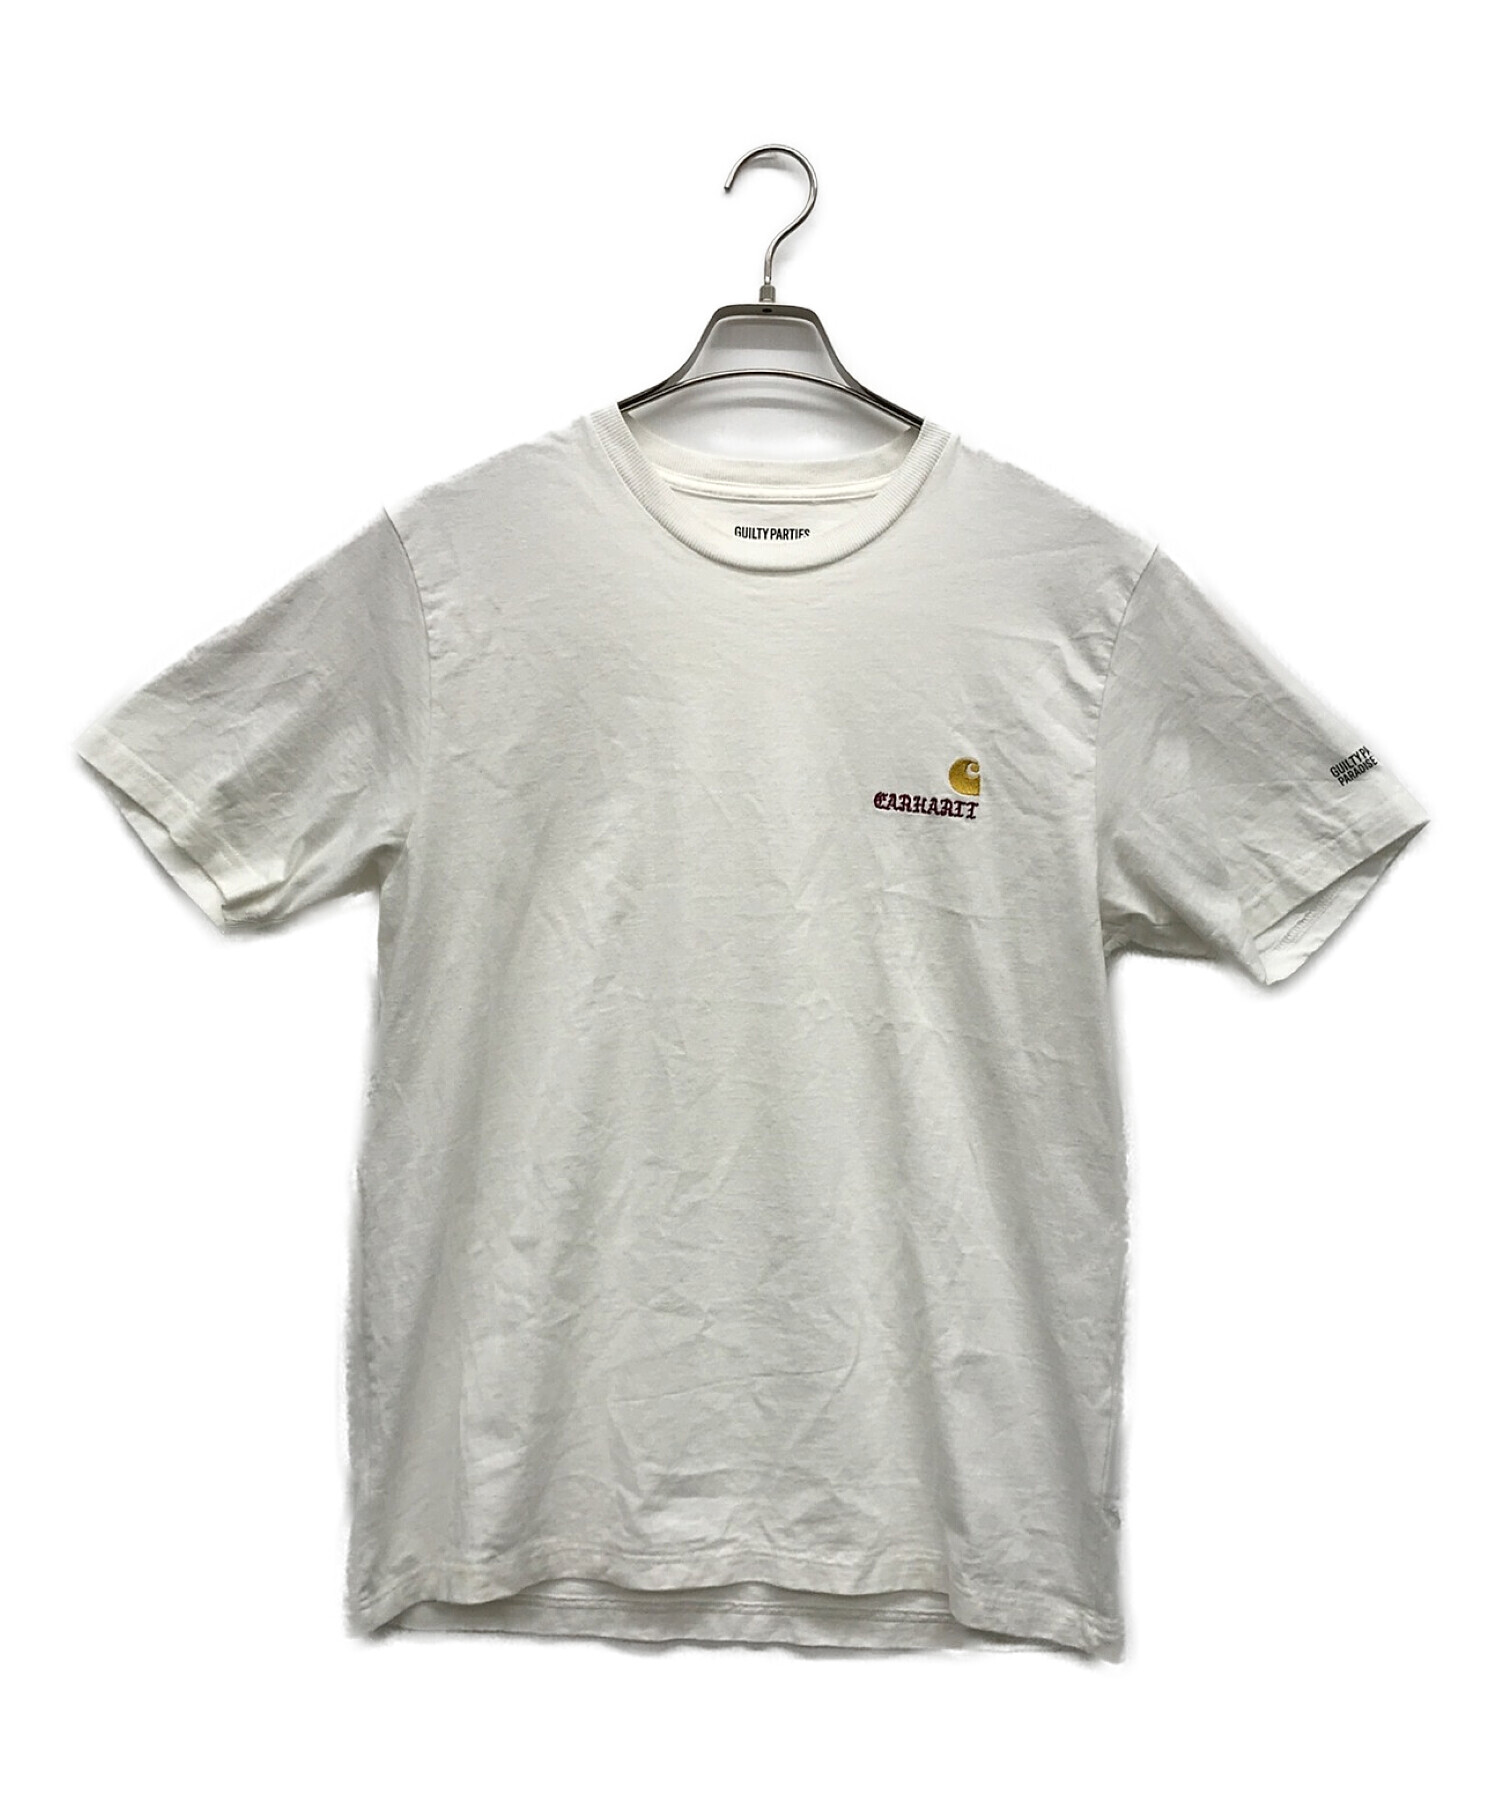 Carhartt WIP × WACKO MARIA (カーハート ダブリューアイピー × ワコマリア) 刺繍Tシャツ ホワイト サイズ:M